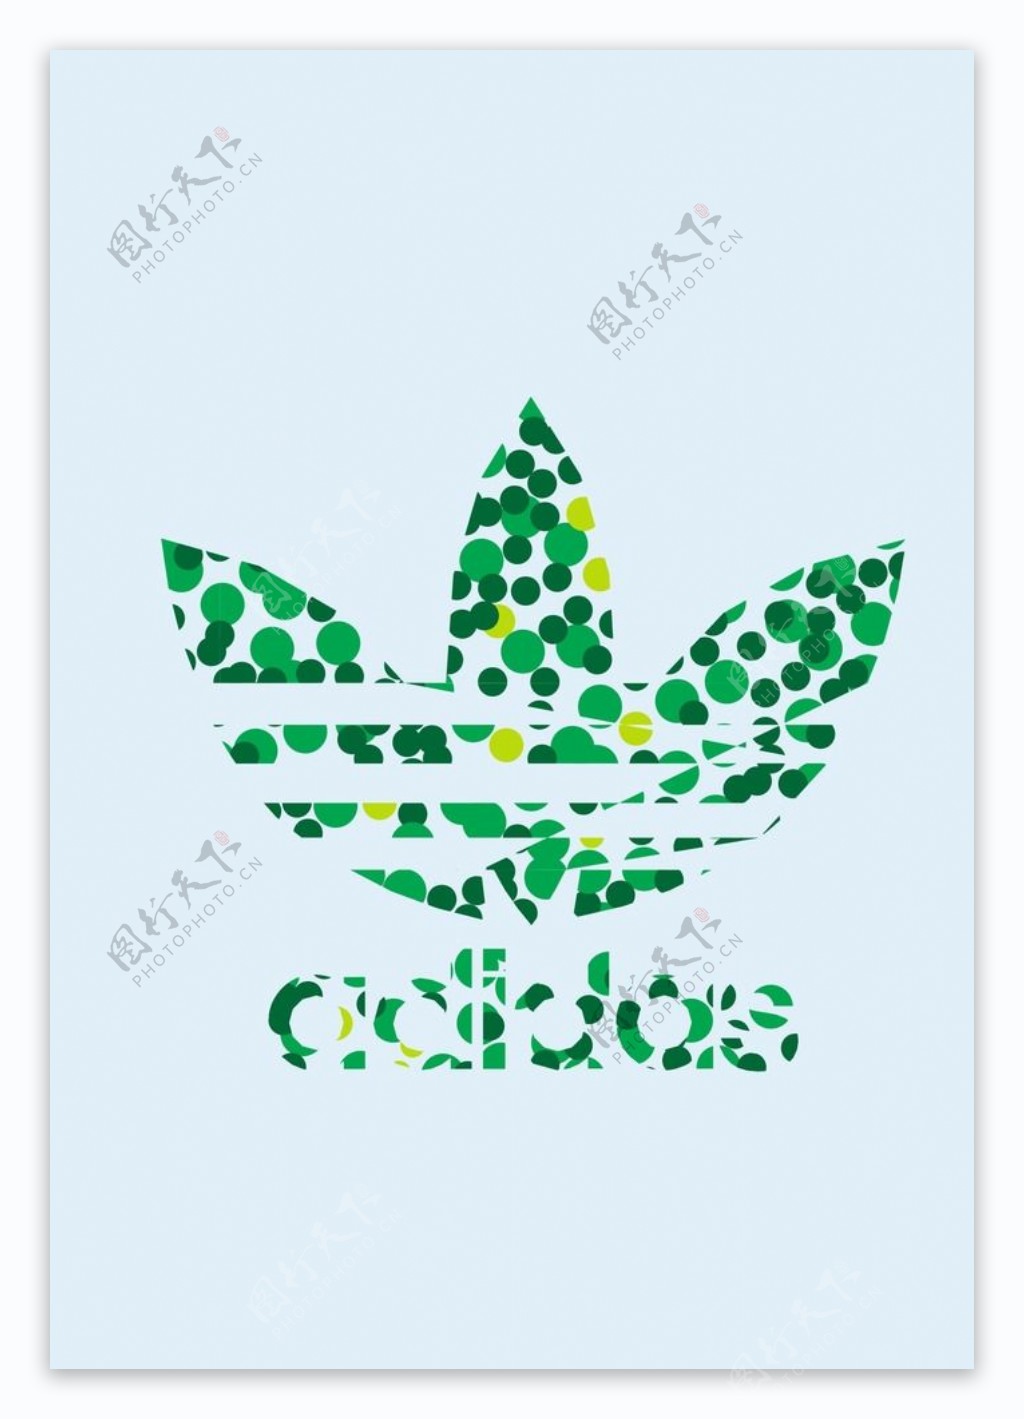 adidas阿迪达斯logo设计图__广告设计_广告设计_设计图库_昵图网nipic.com